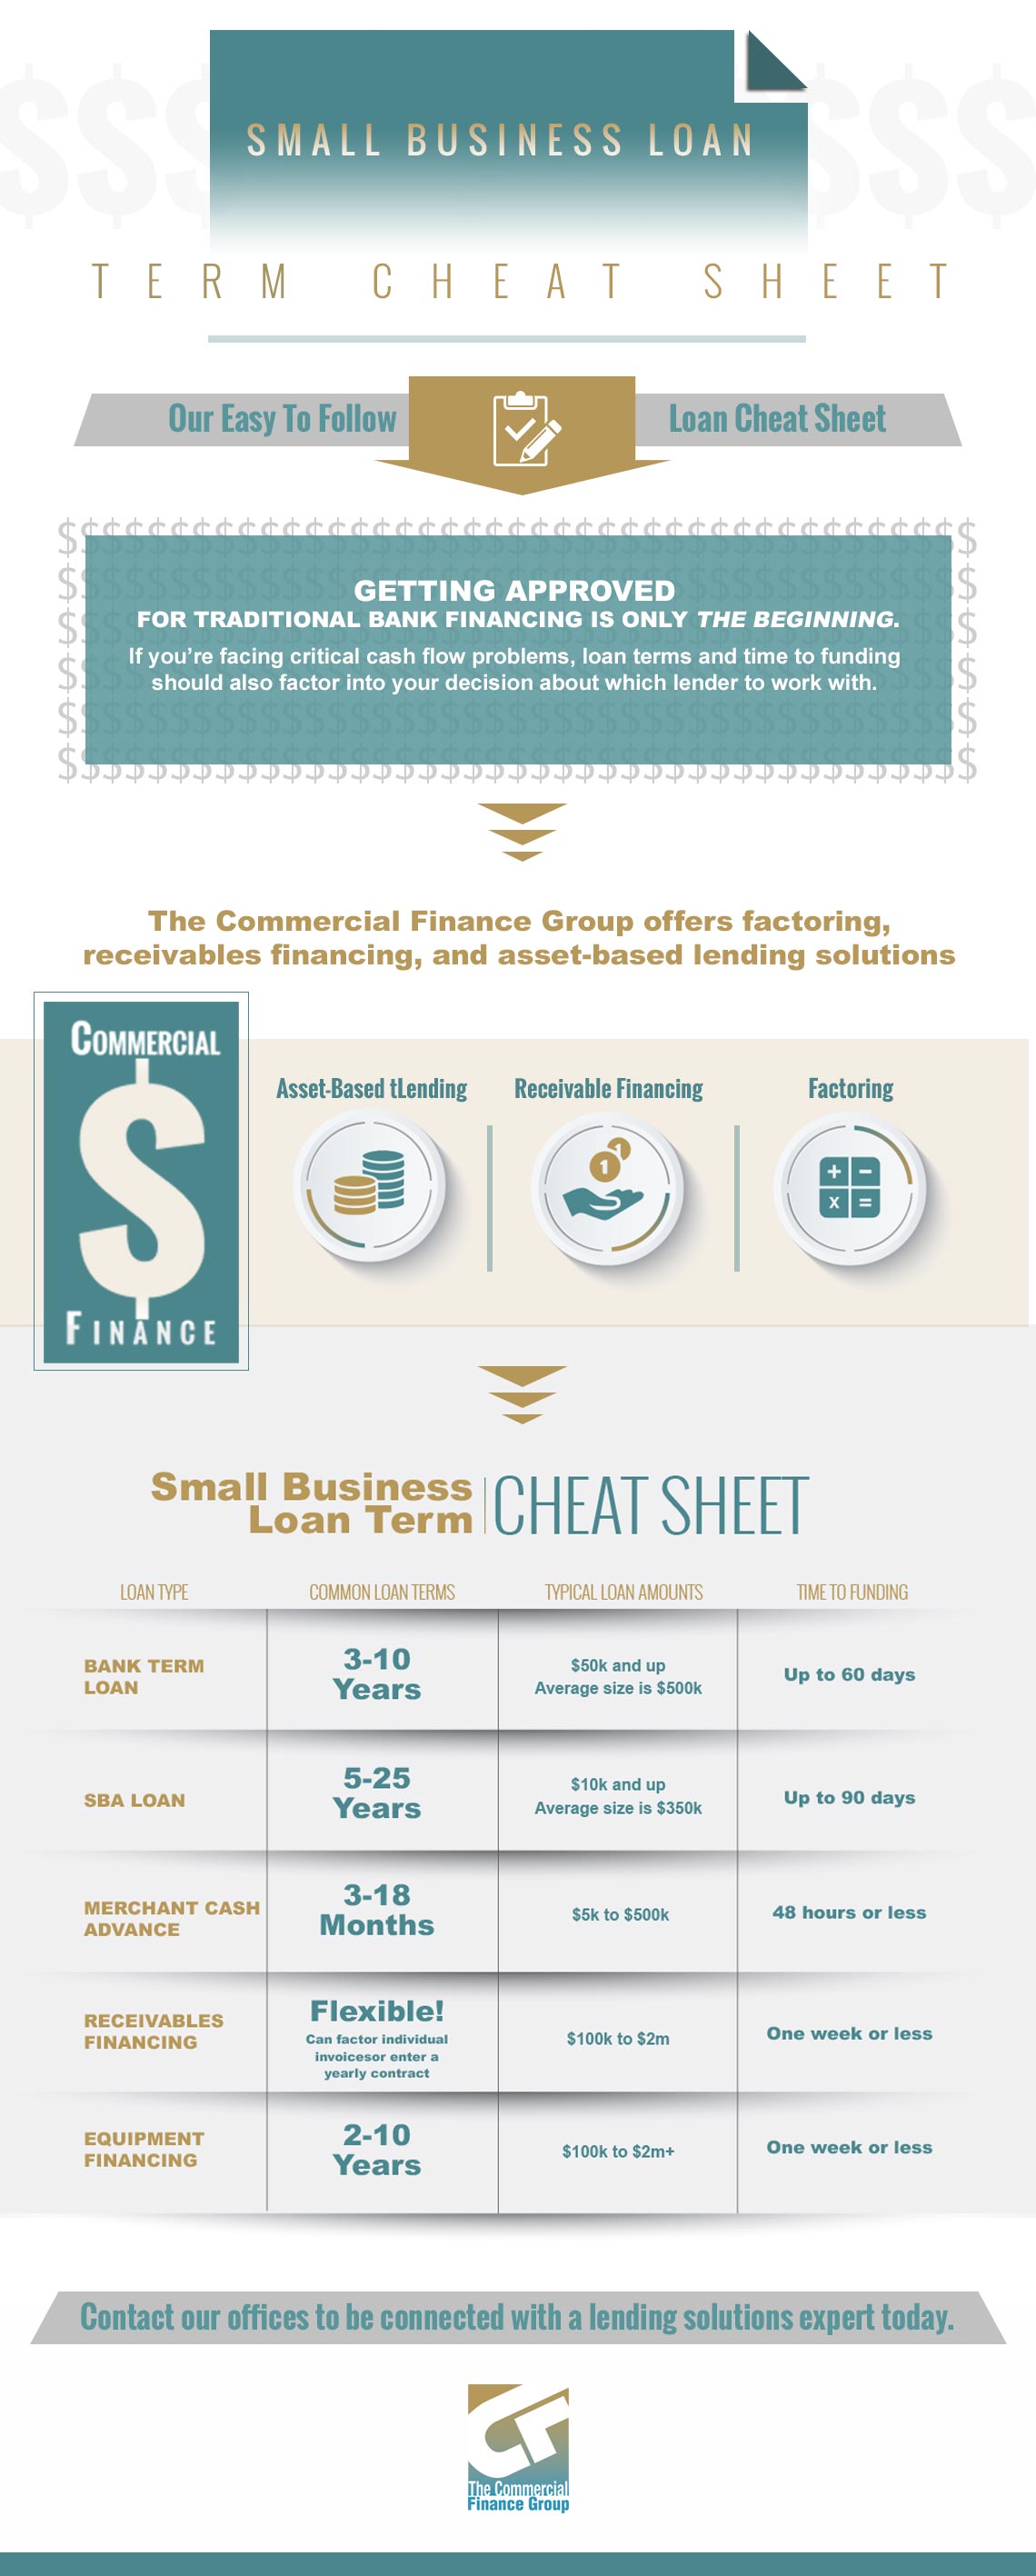 Small business loan term cheat sheet.